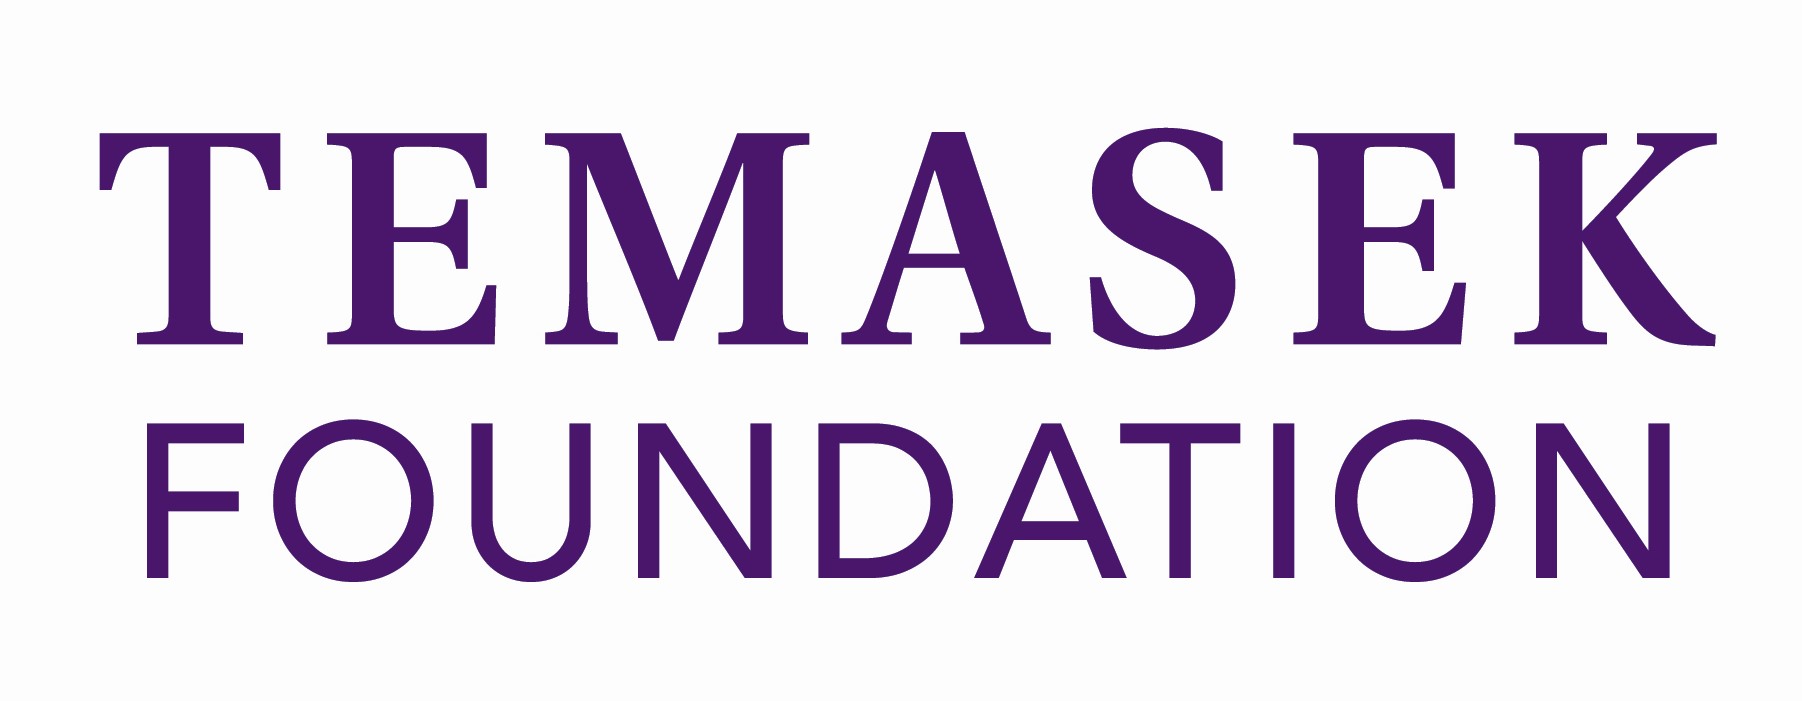 Temasek foundation logo